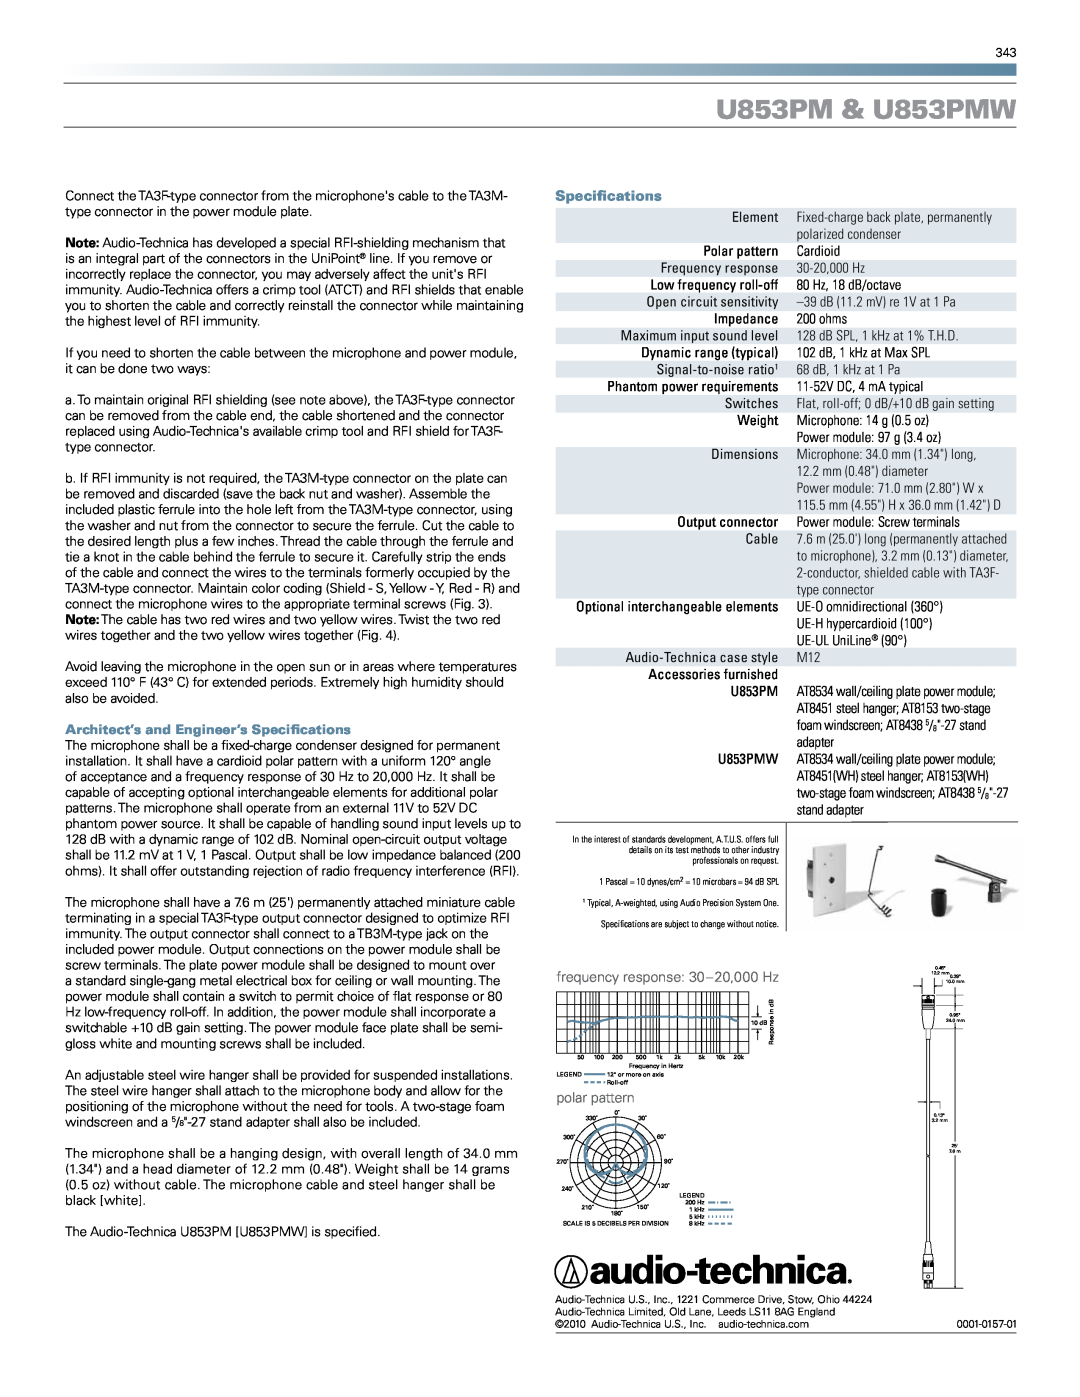 Audio-Technica manual U853PM & U853PMW, Specifications, frequency response 30-20,000 Hz, polar pattern 